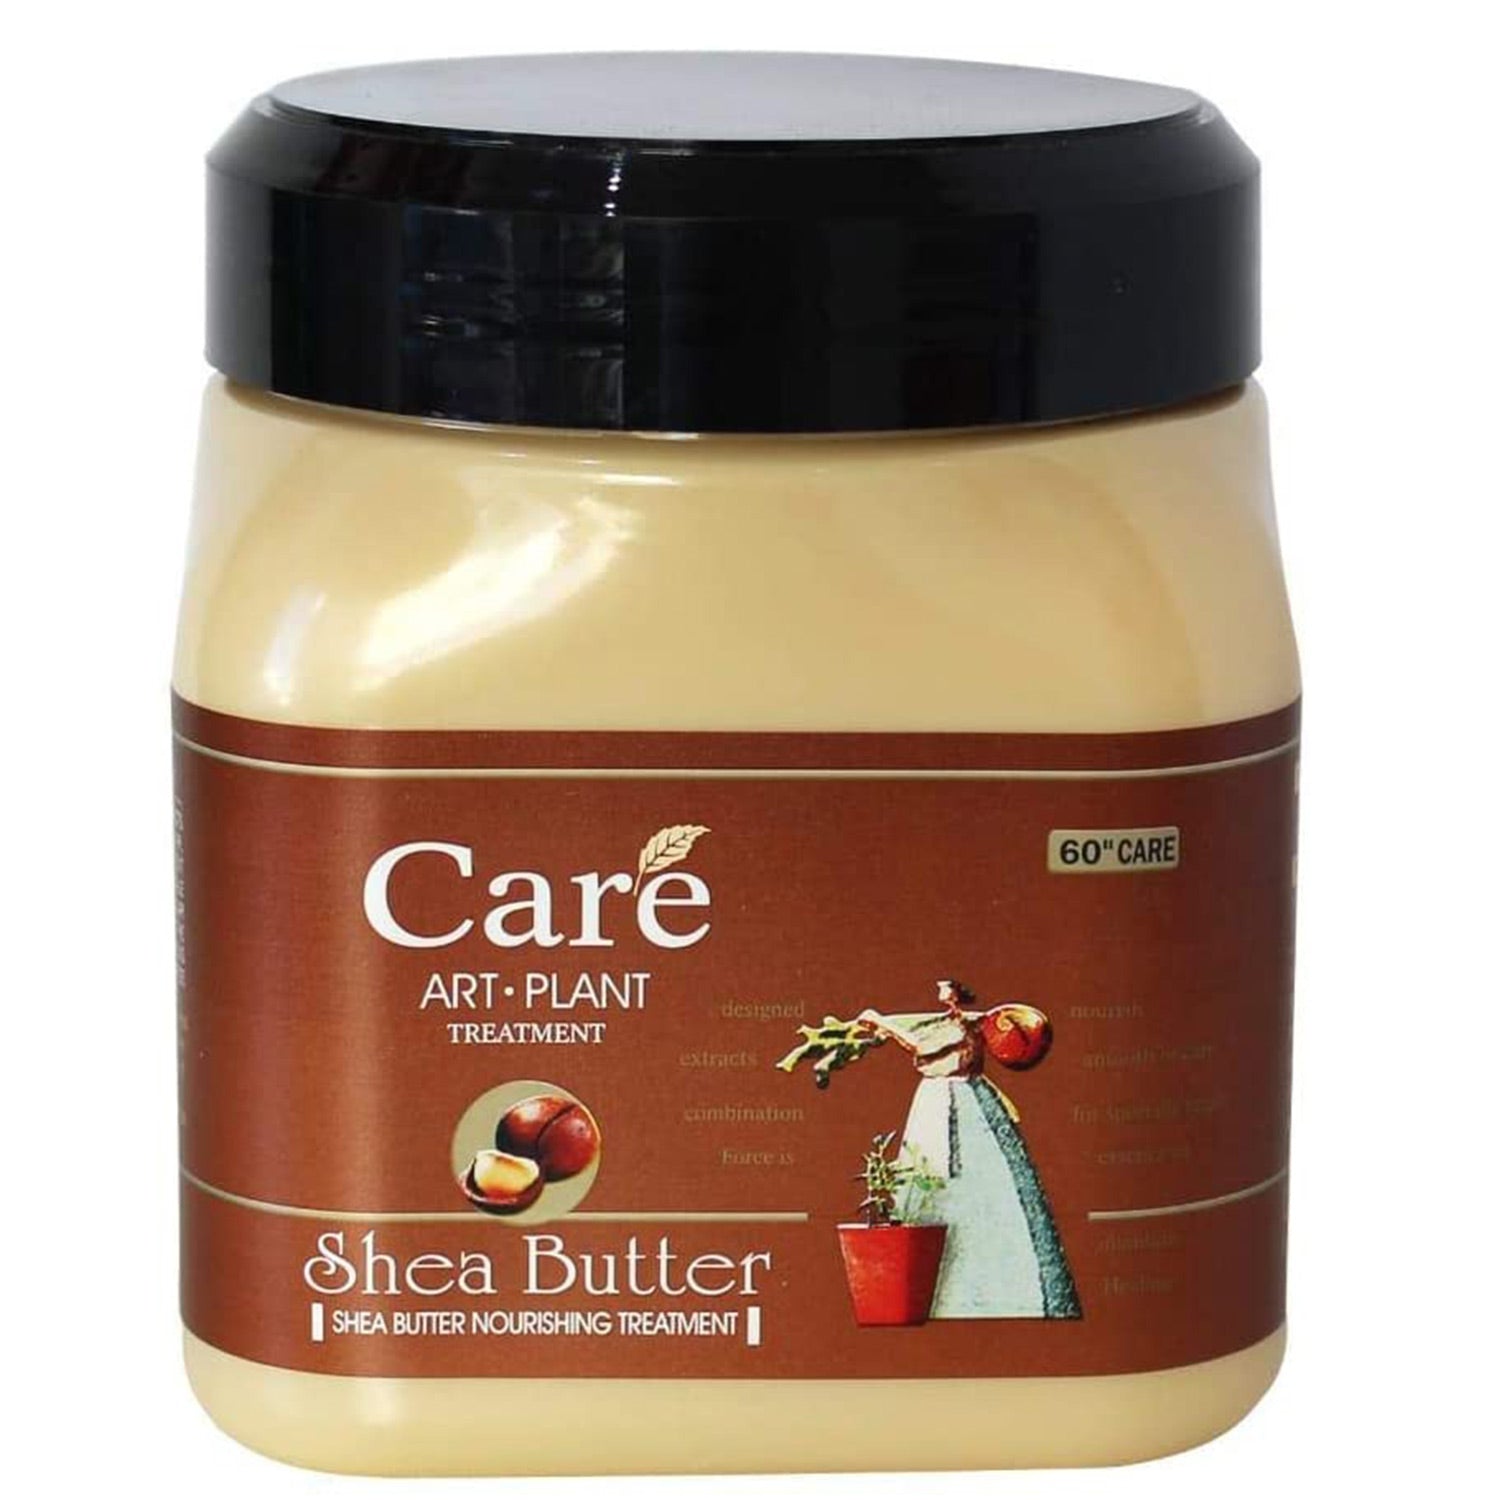 Washami Care art plant shea butter nourishing treatment 650 g Value Pack of 3 